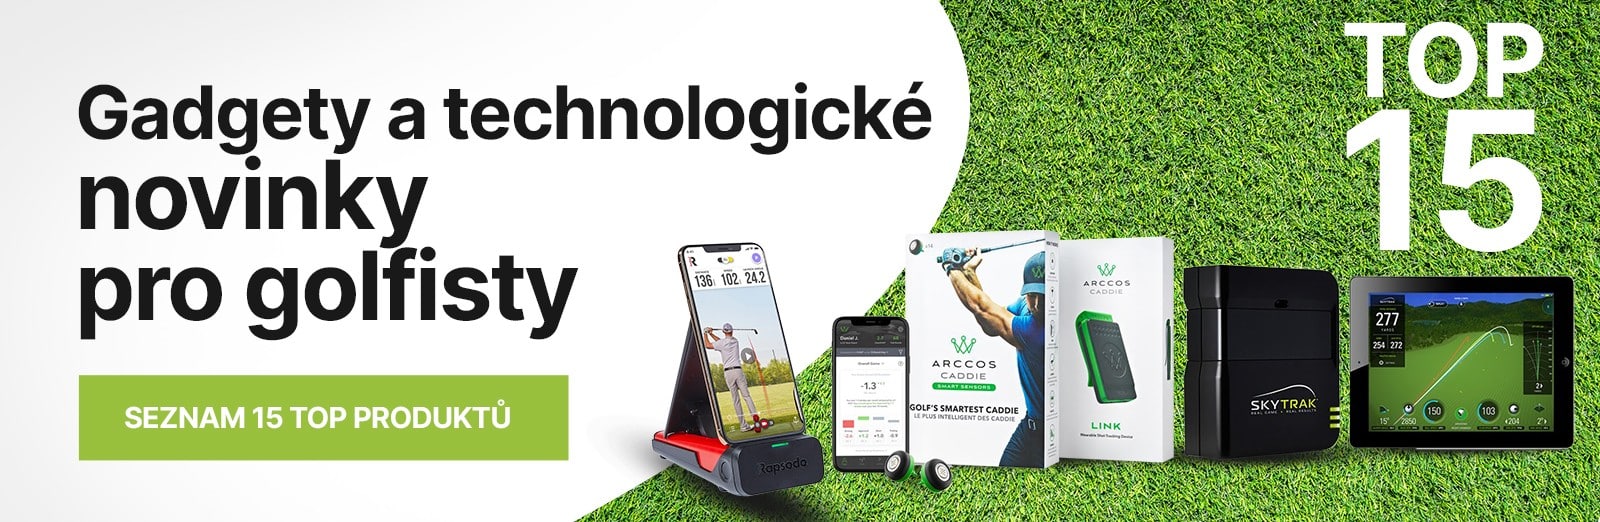 gadgety technologicke golfove novinky seznam 15 top